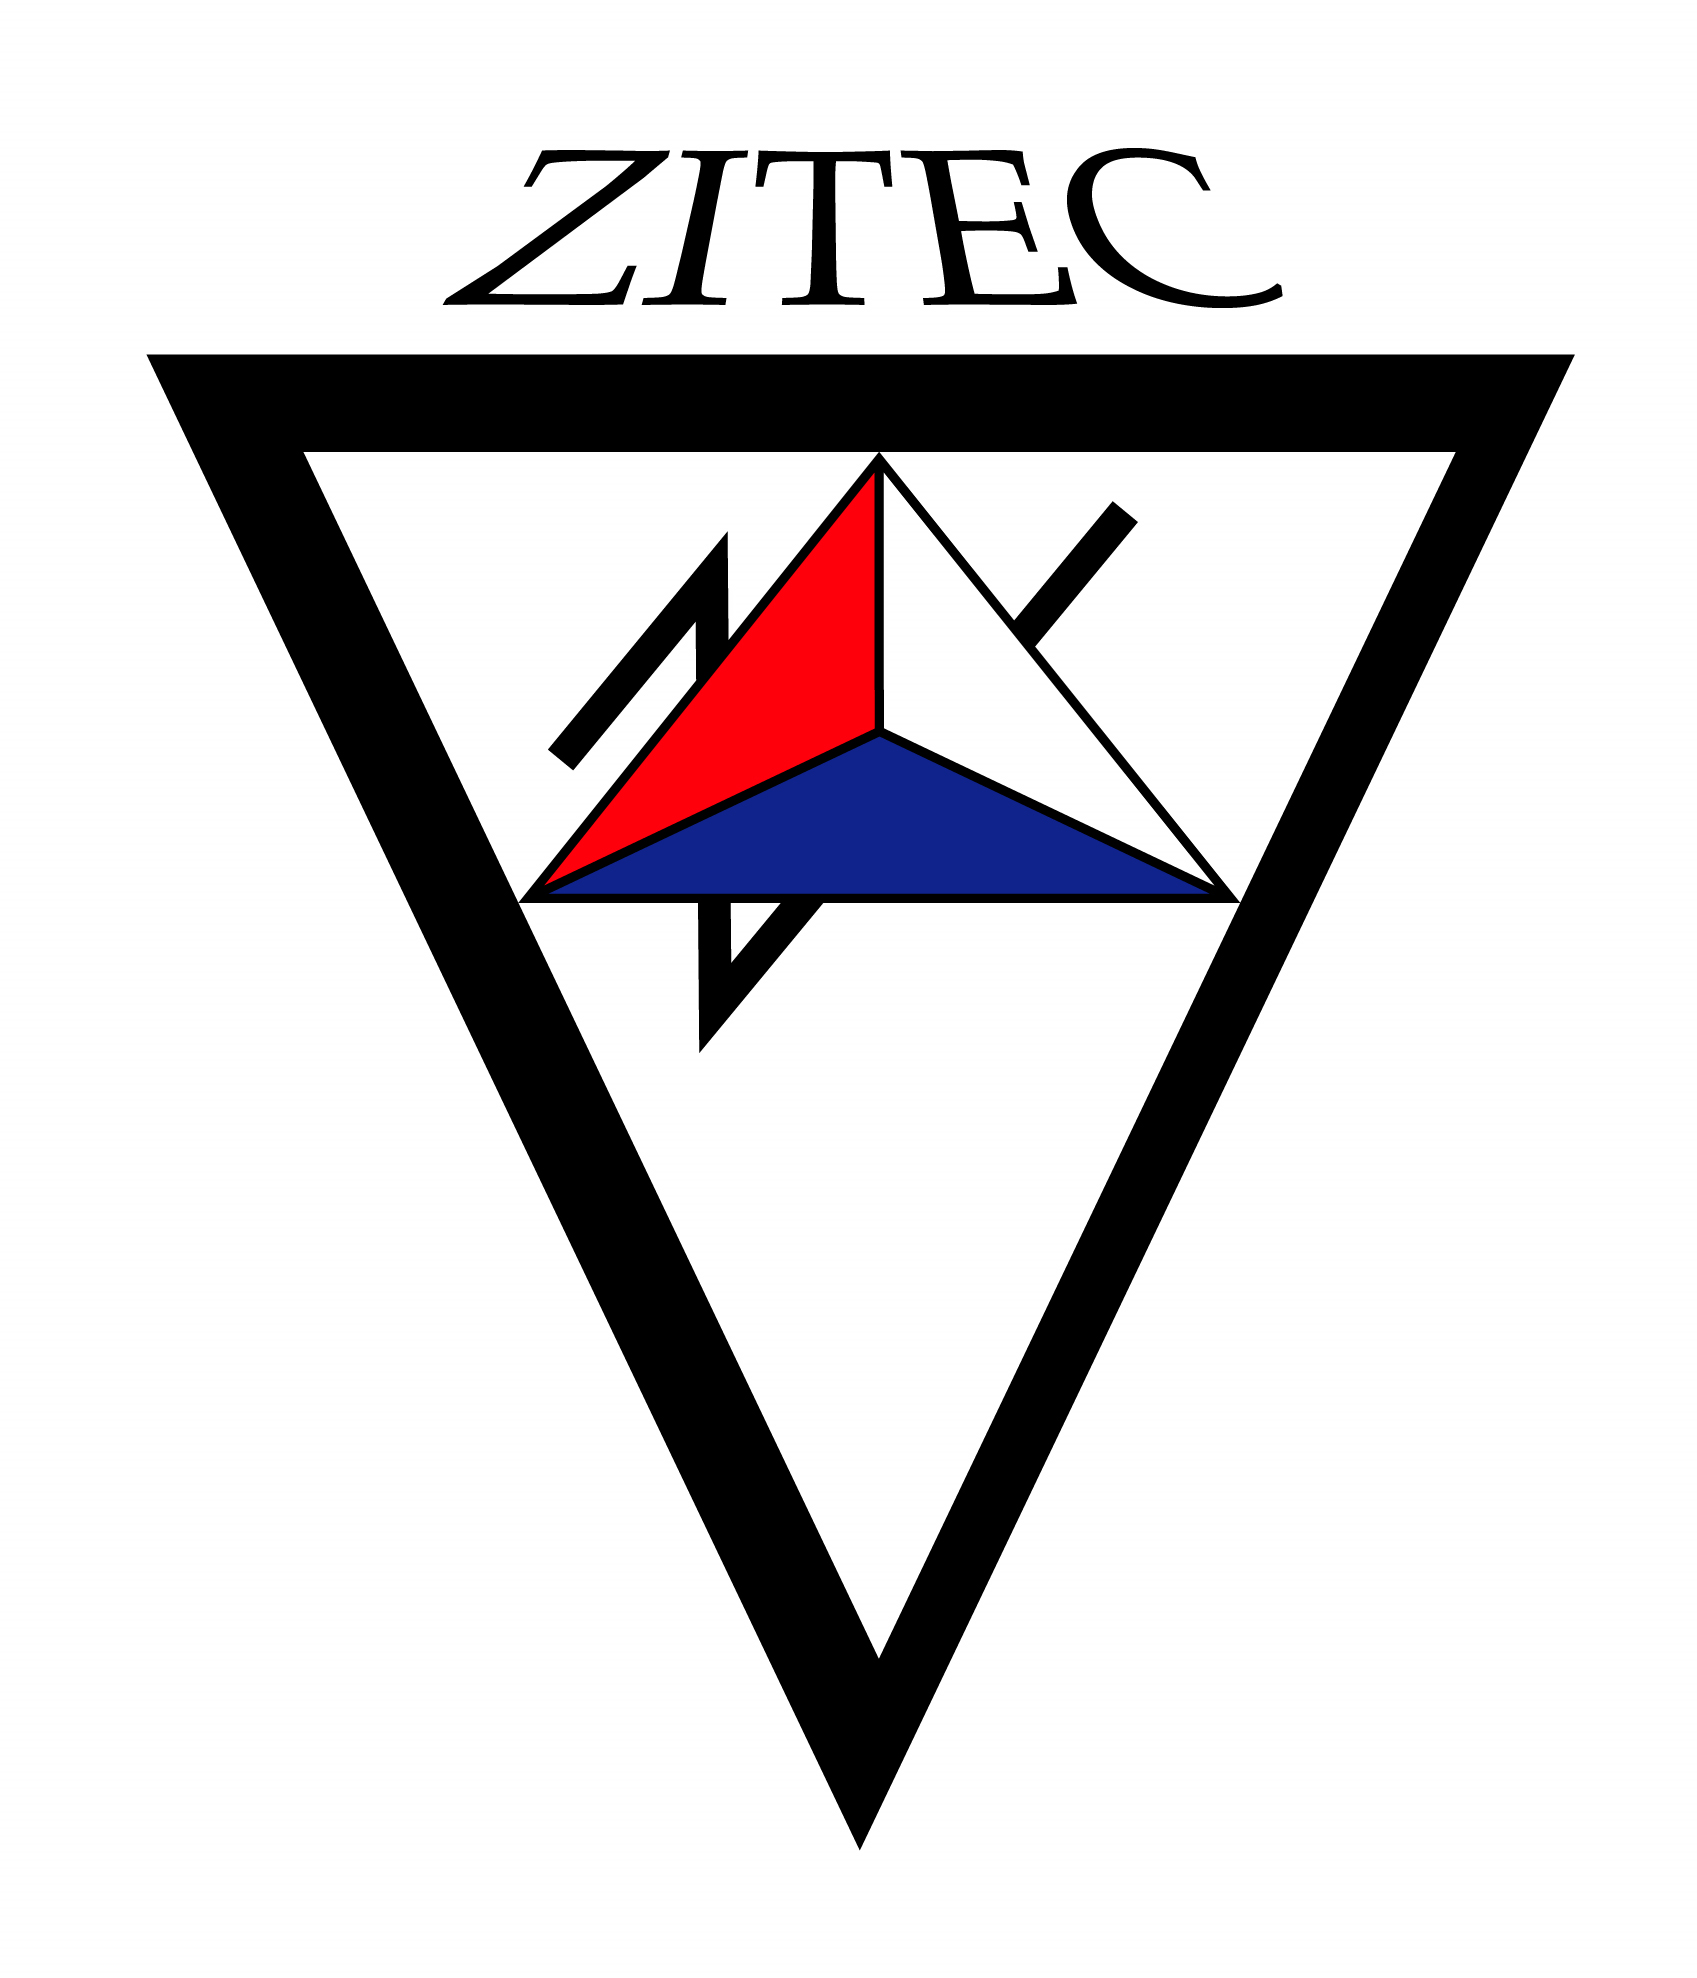 Zitec logo